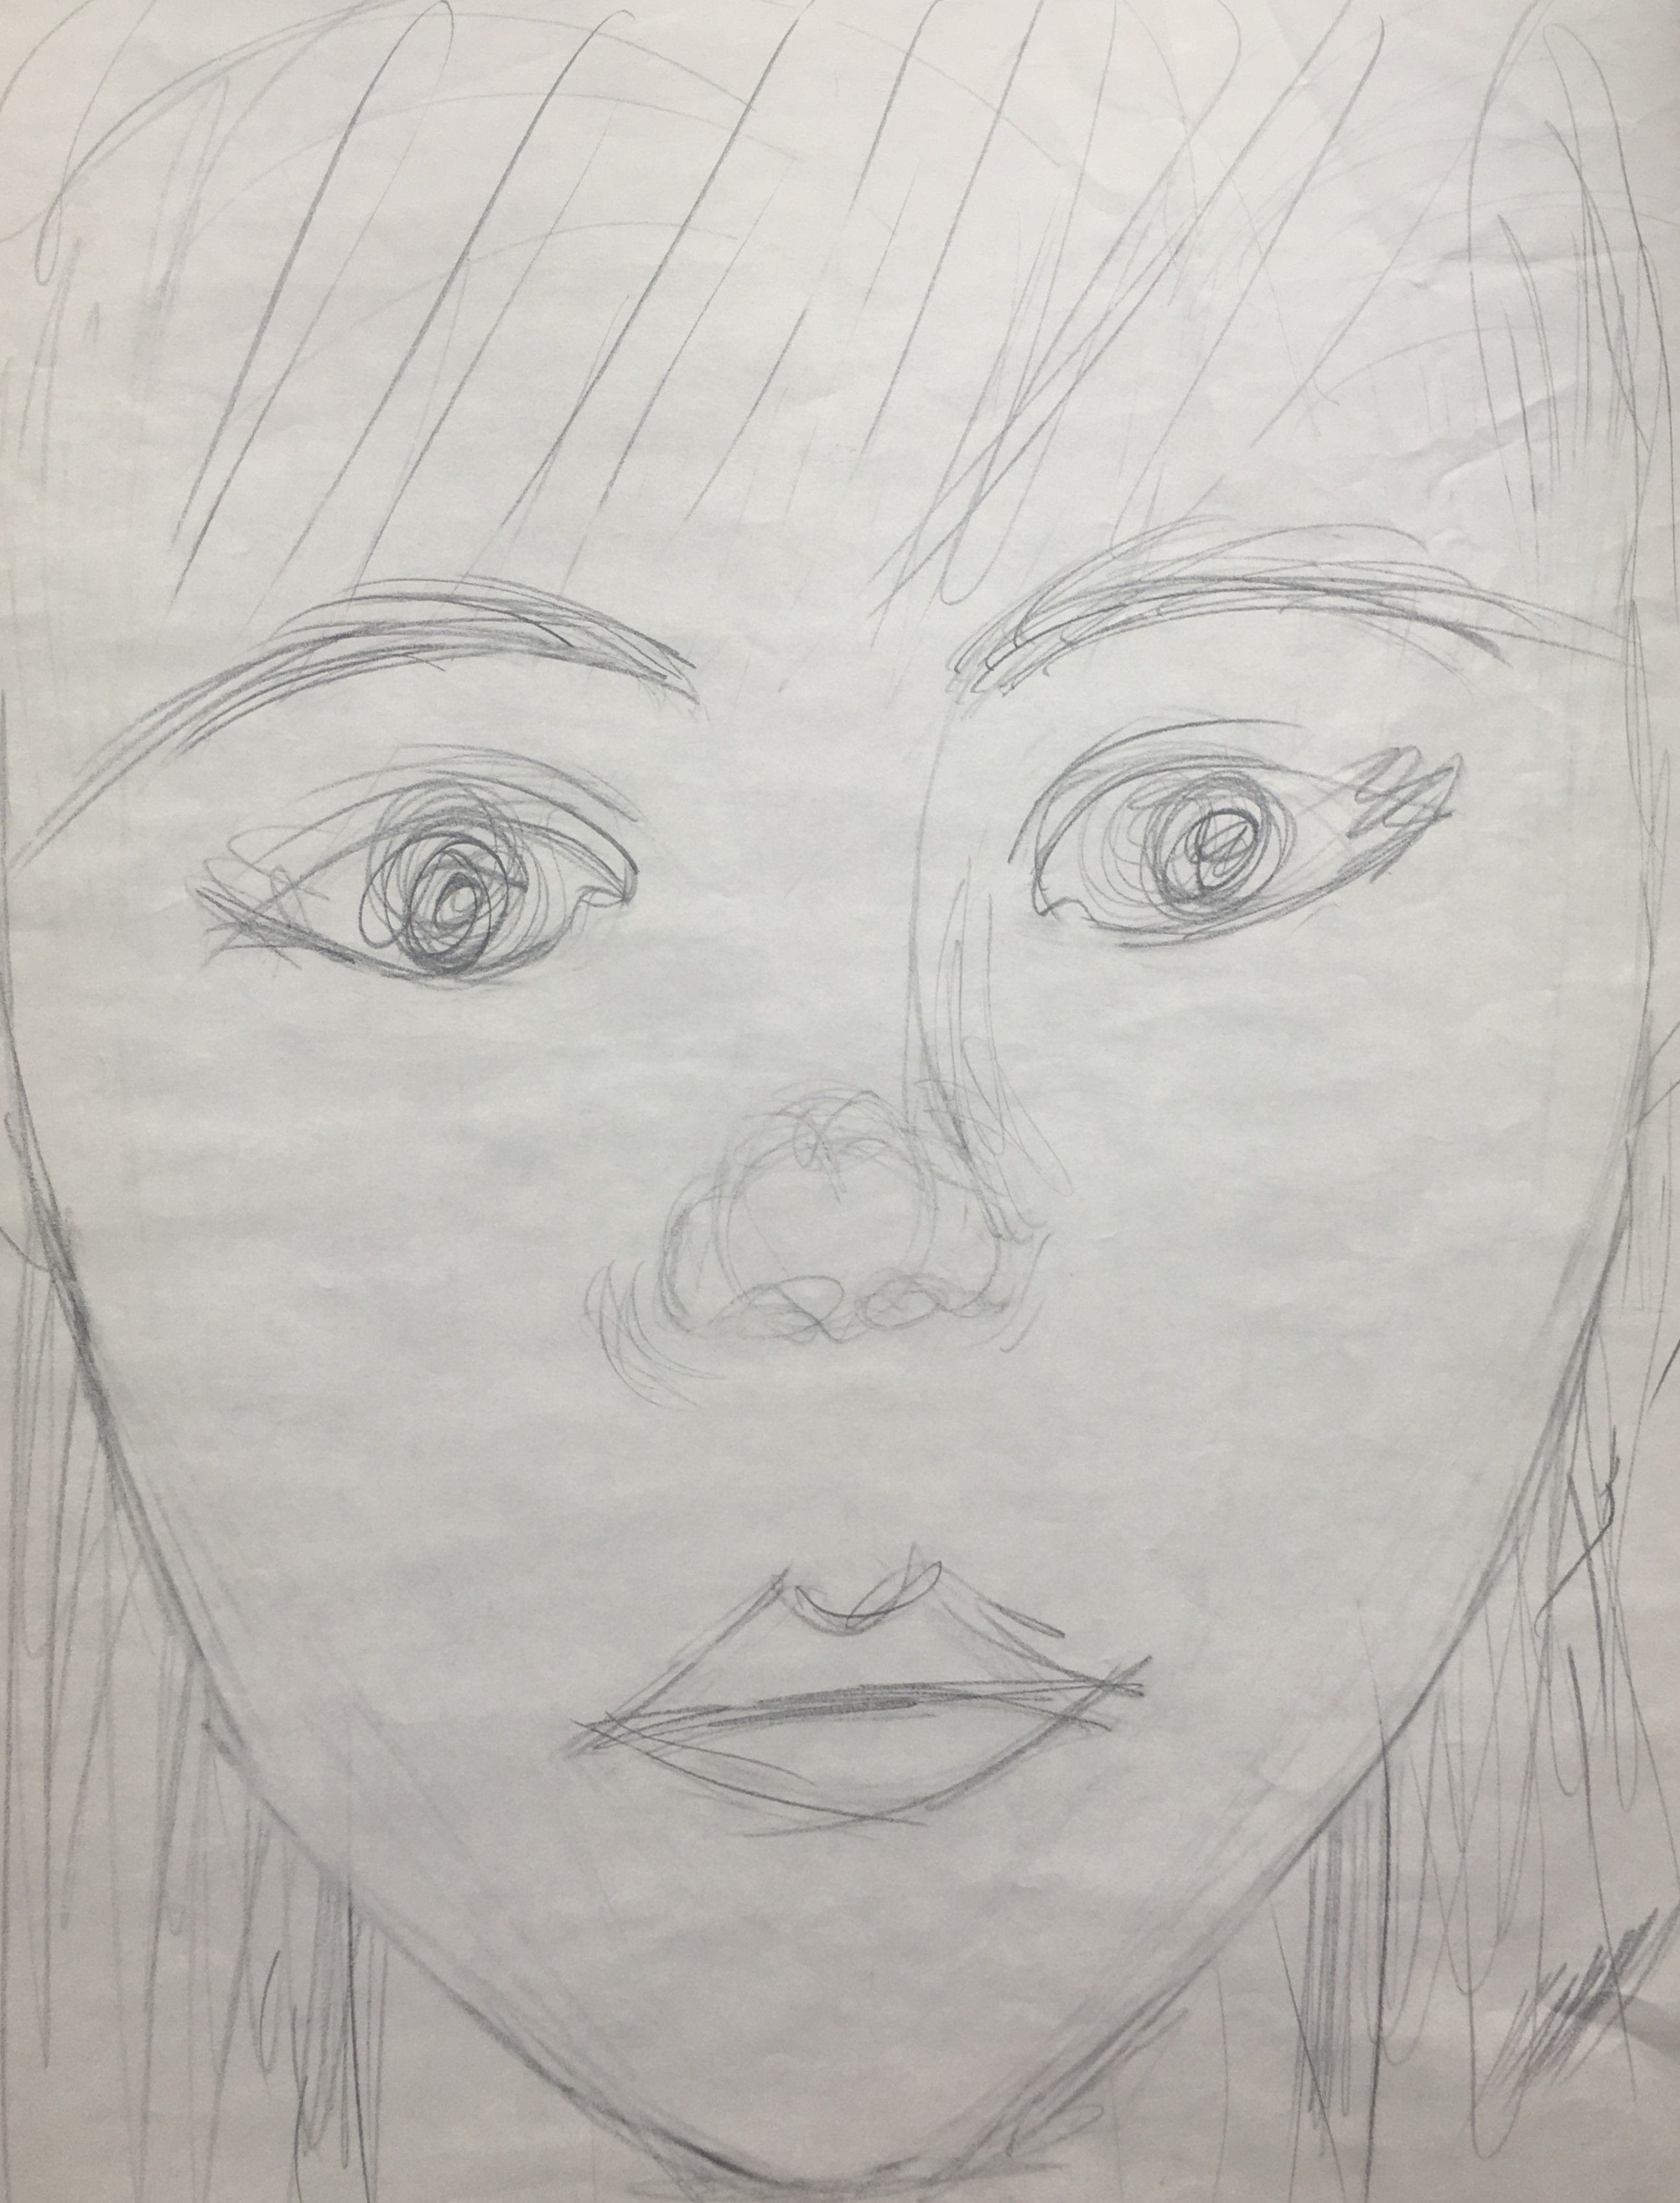 Self-Portrait Study, 1990
Pencil on Paper
18"W x 24"H, Walli White, artist